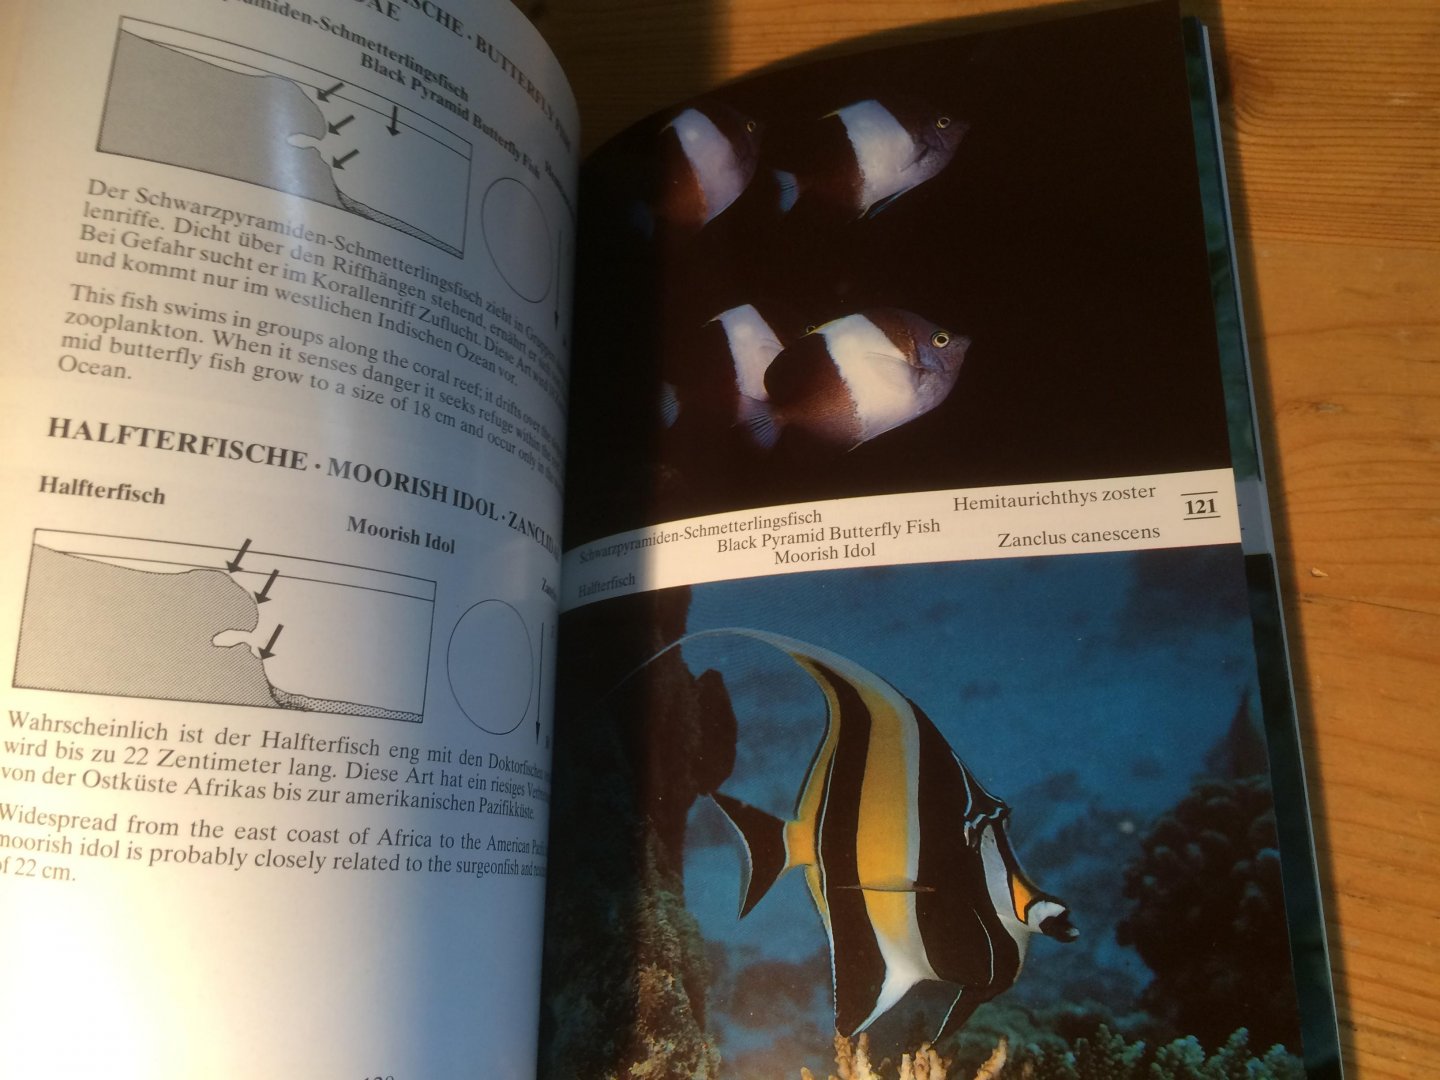 Nahke, Peter & Peter Wirtz - Underwater Guide Maldives - Fish